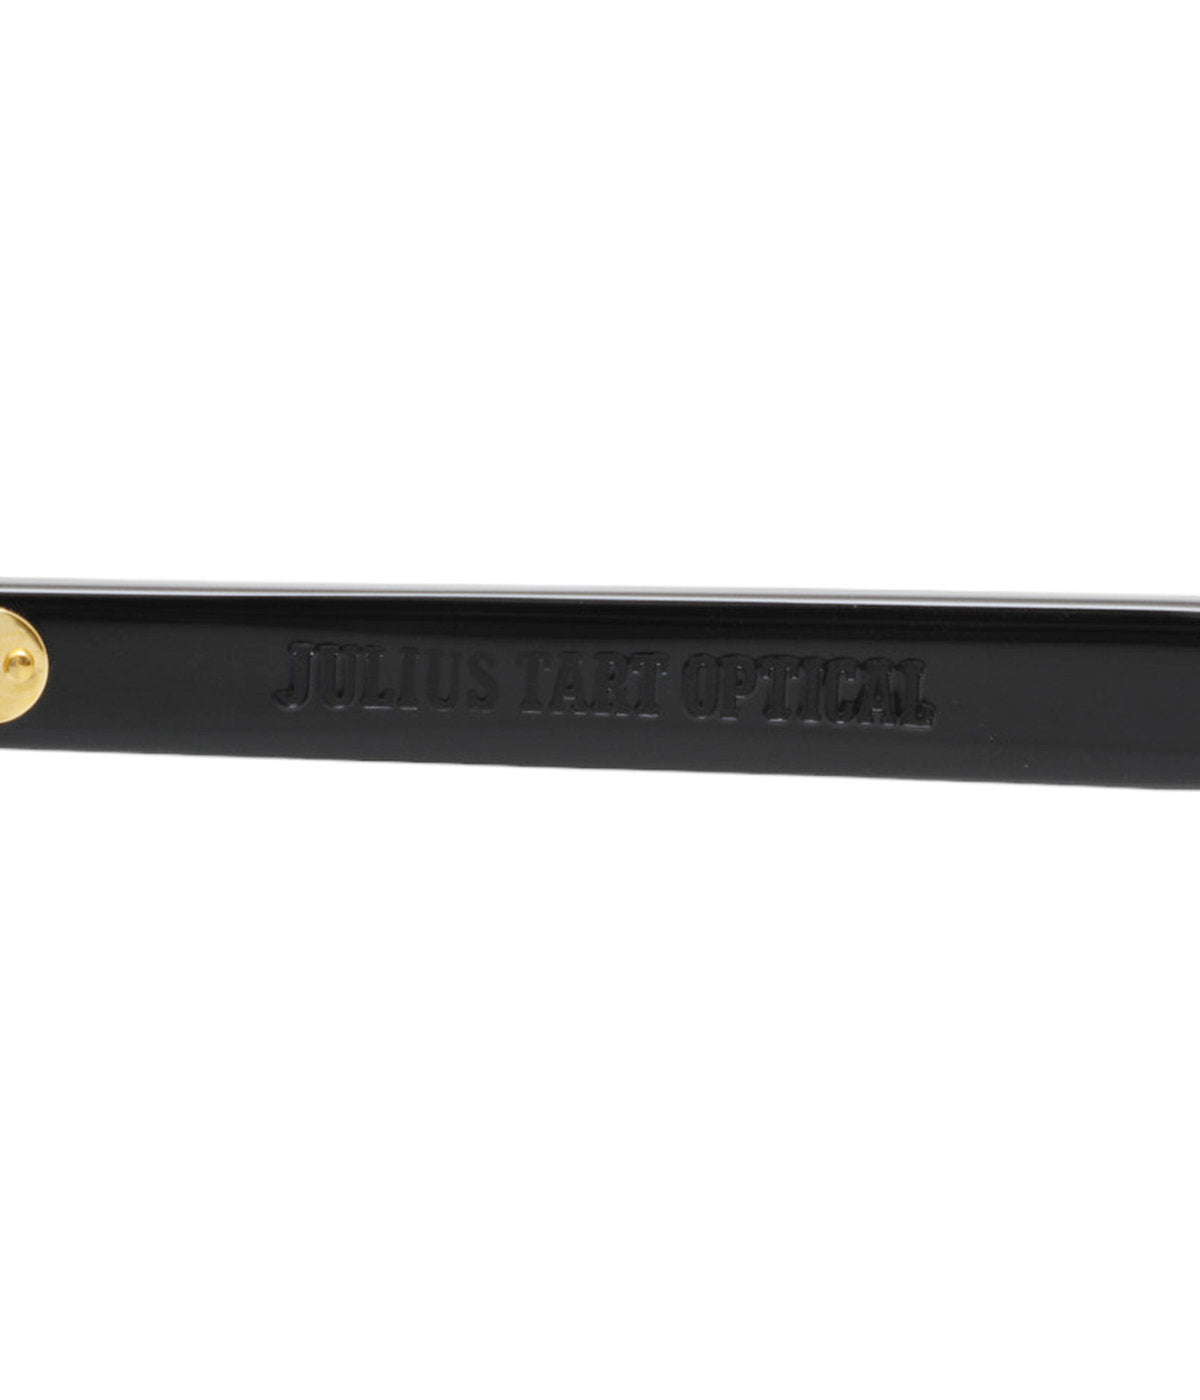 JULIUS TART OPTICAL AR Sunglass BLACK BROW / BL-60 Gold Edition